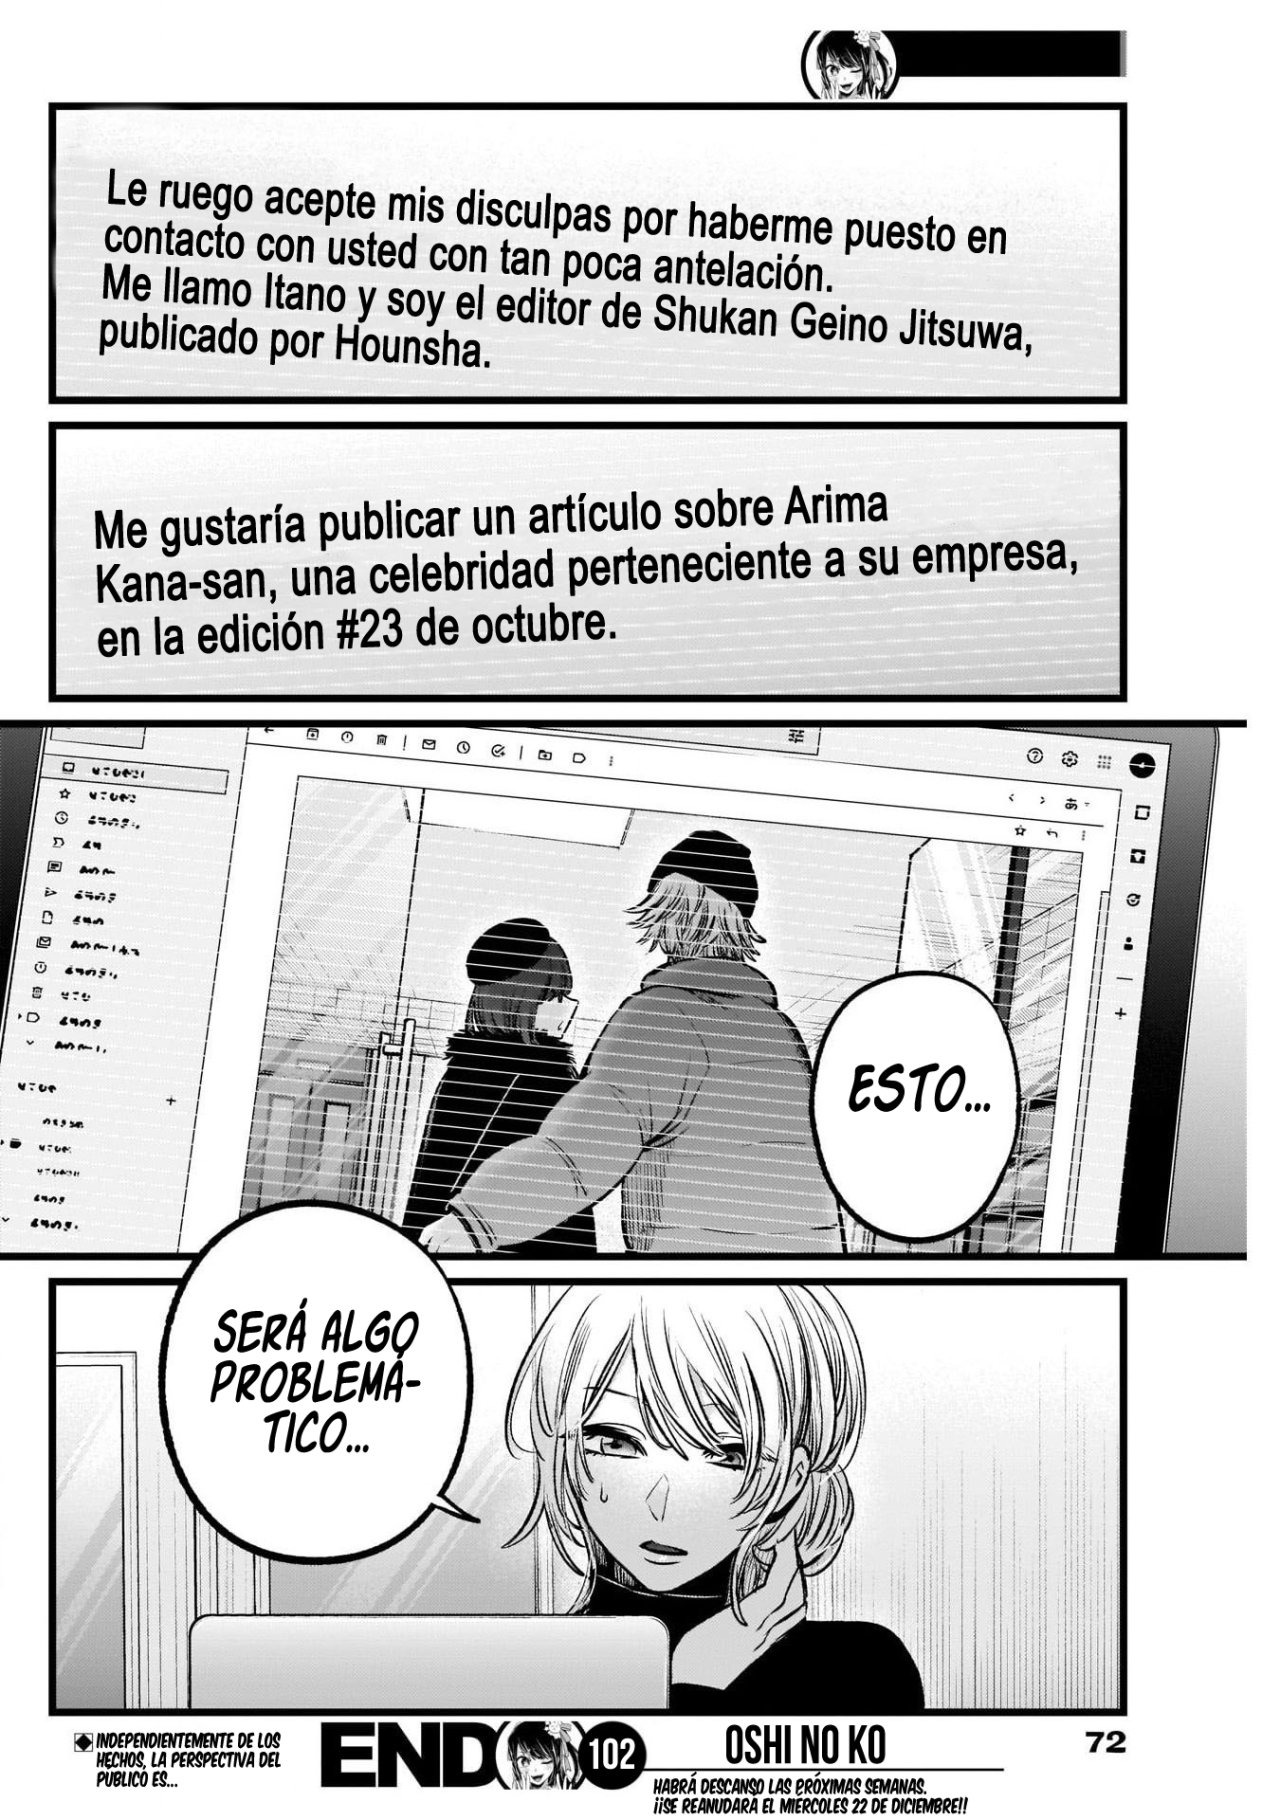 Oshi No Ko, Capitulo 102 | Espscans - Manga En Español Online Gratis ...